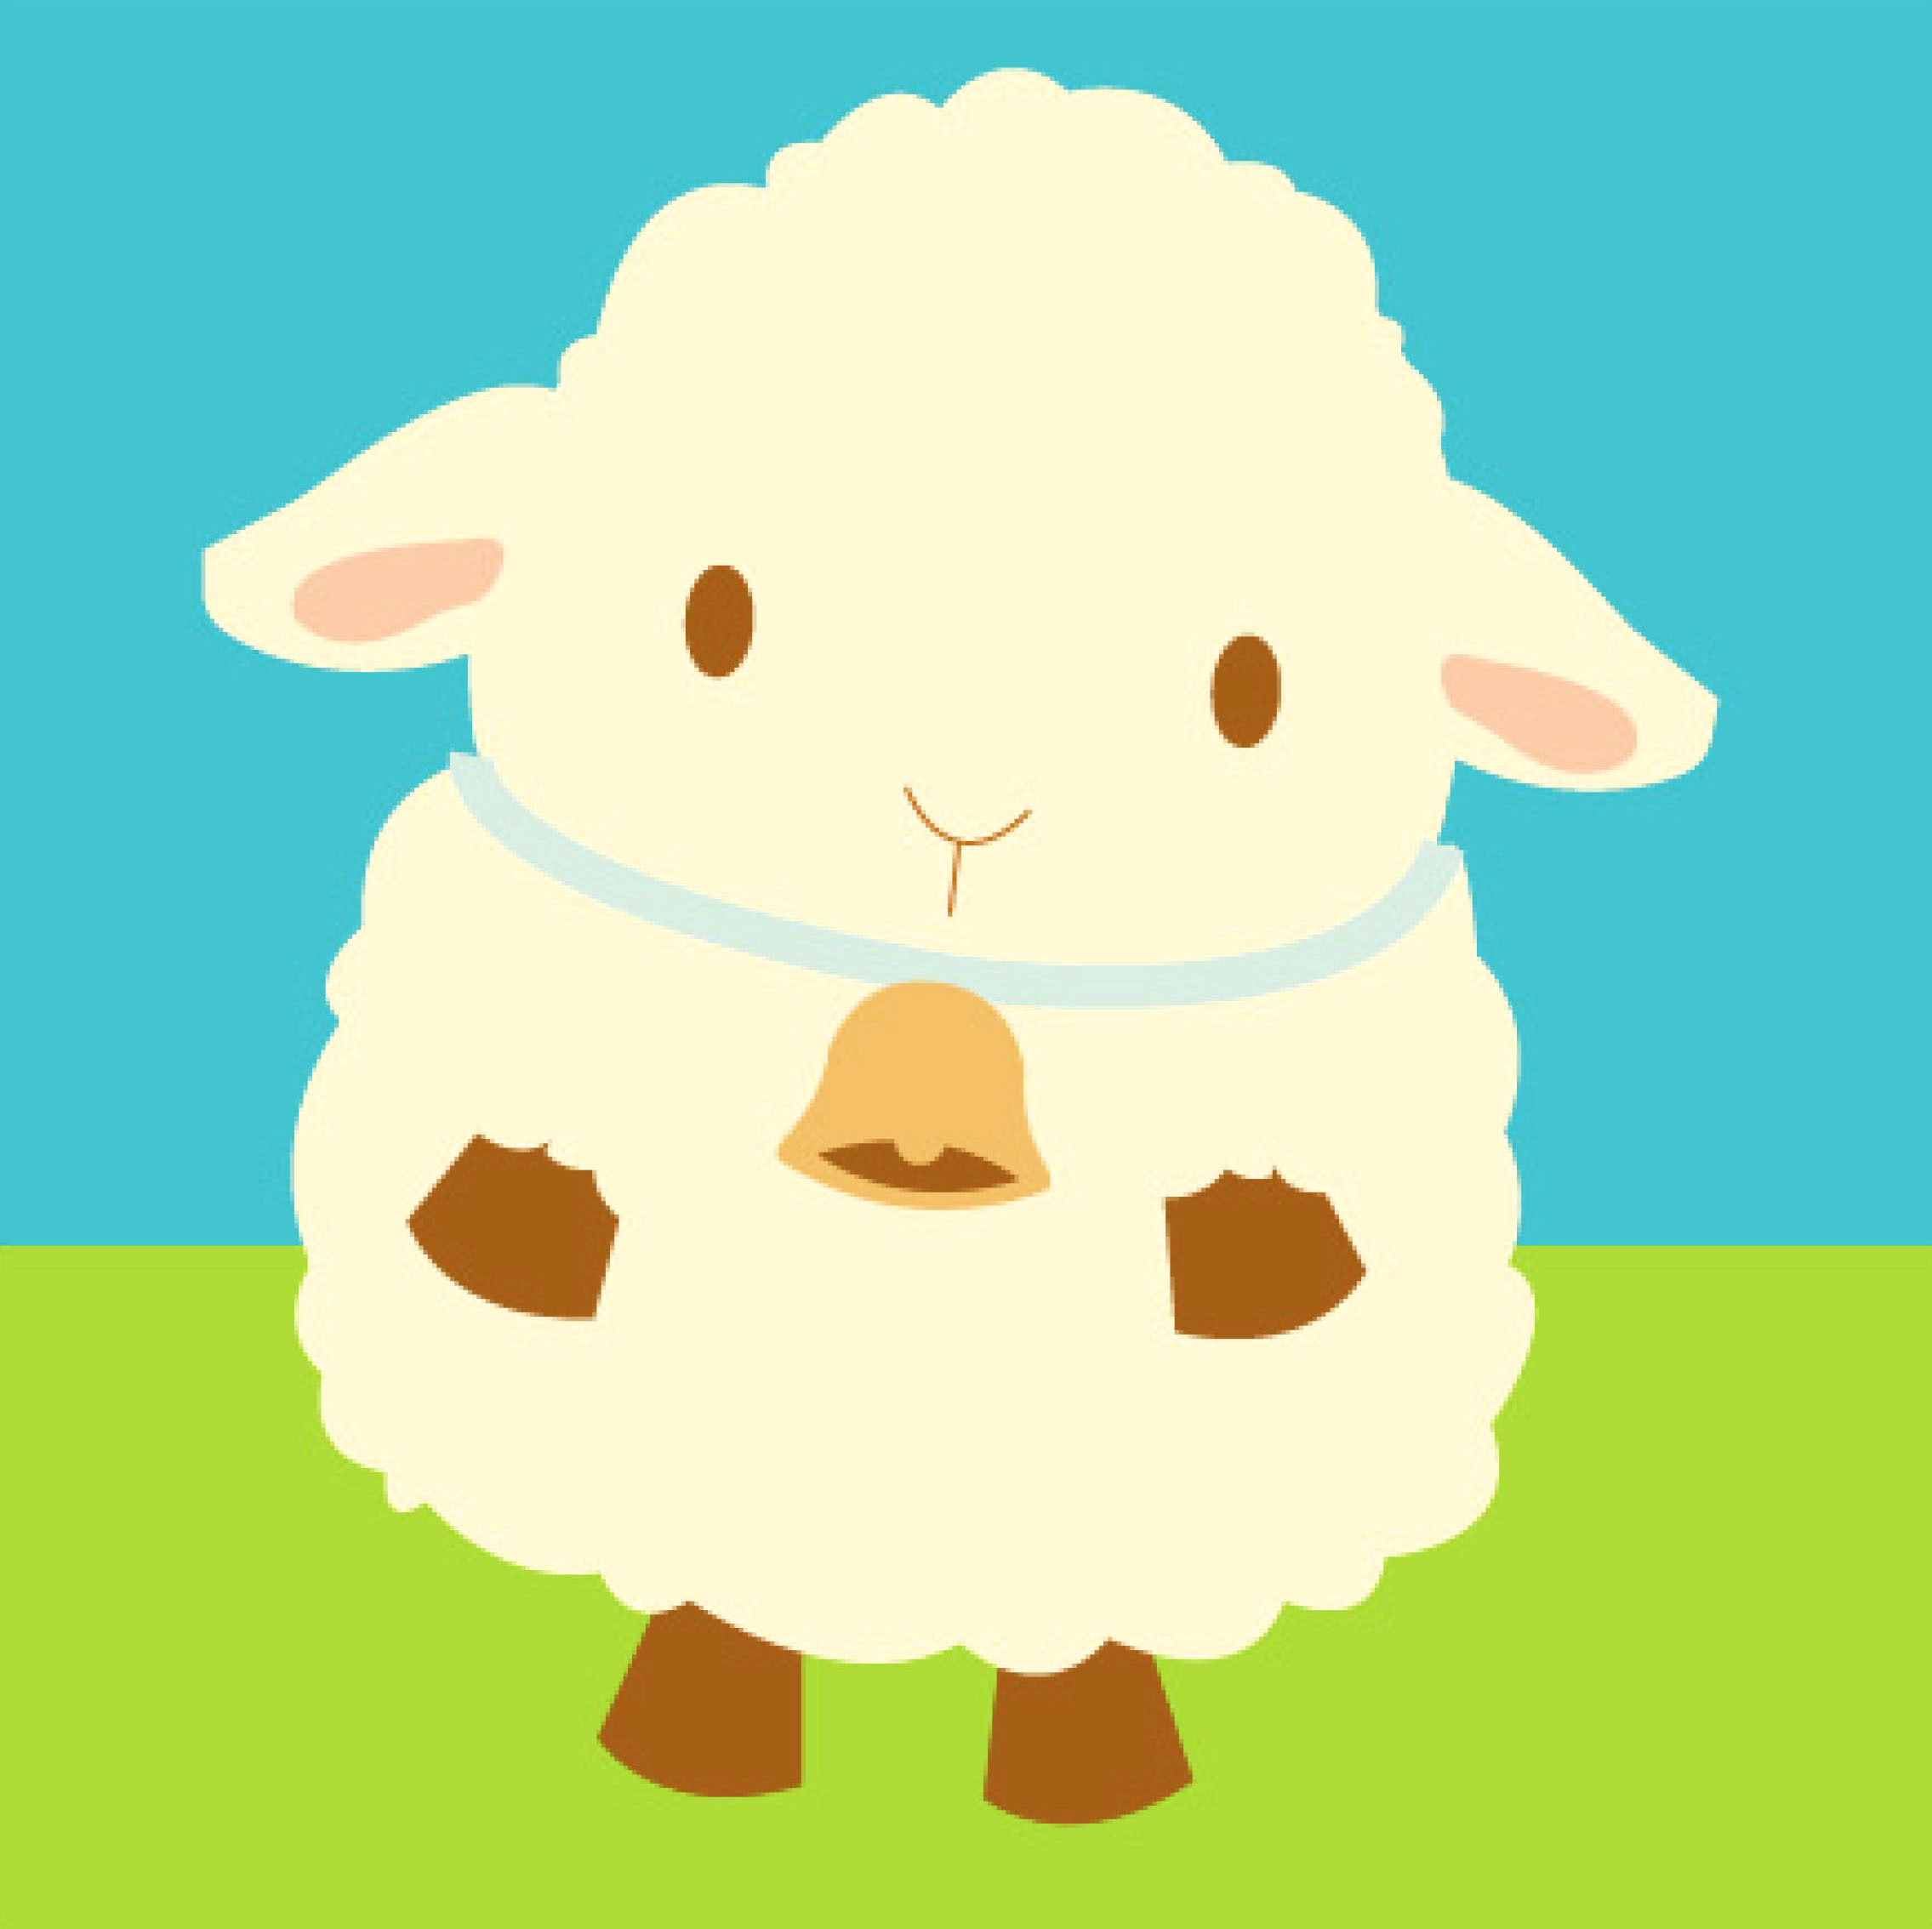 Free Lamb Image, Download Free Clip Art, Free Clip Art on ...